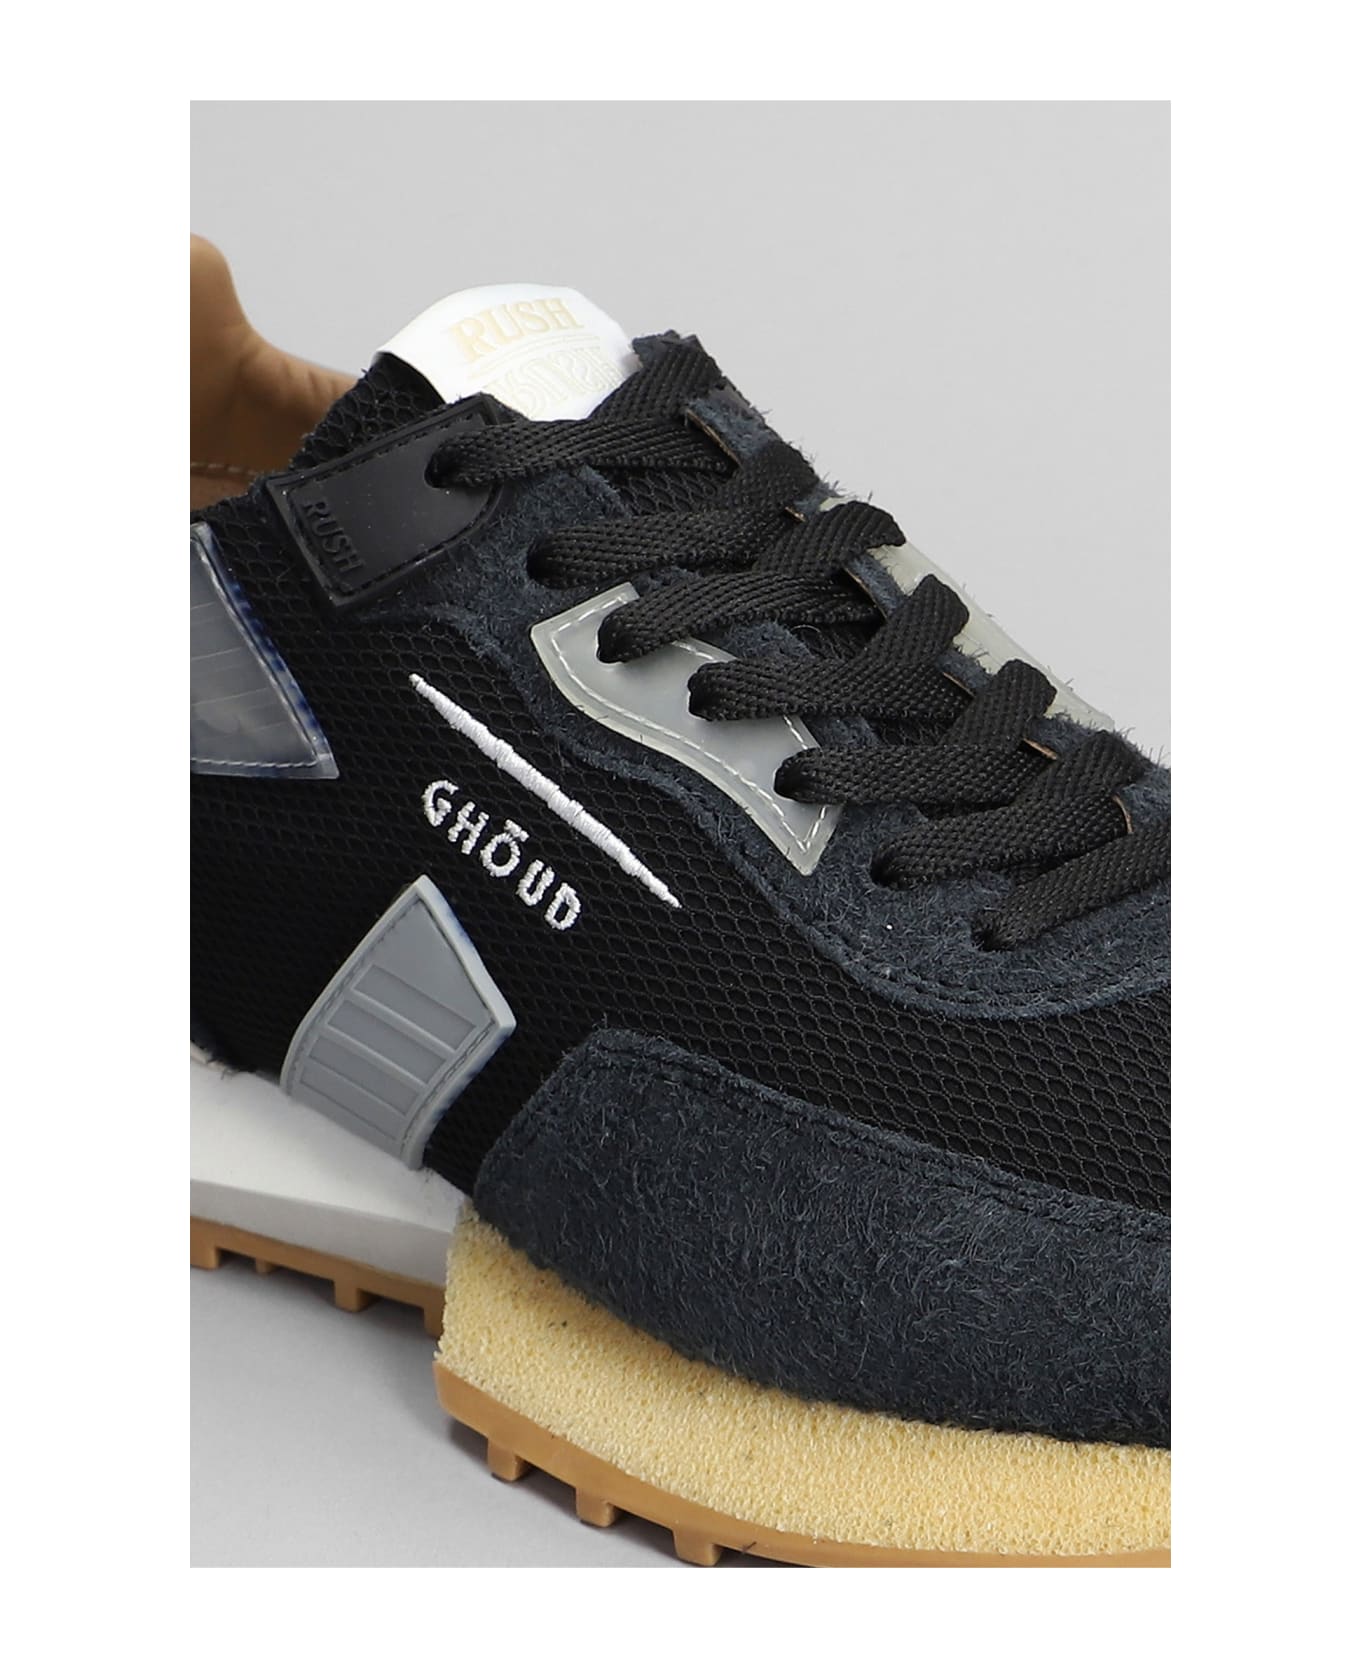 GHOUD Rush Groove Sneakers In Black Suede And Fabric - Black